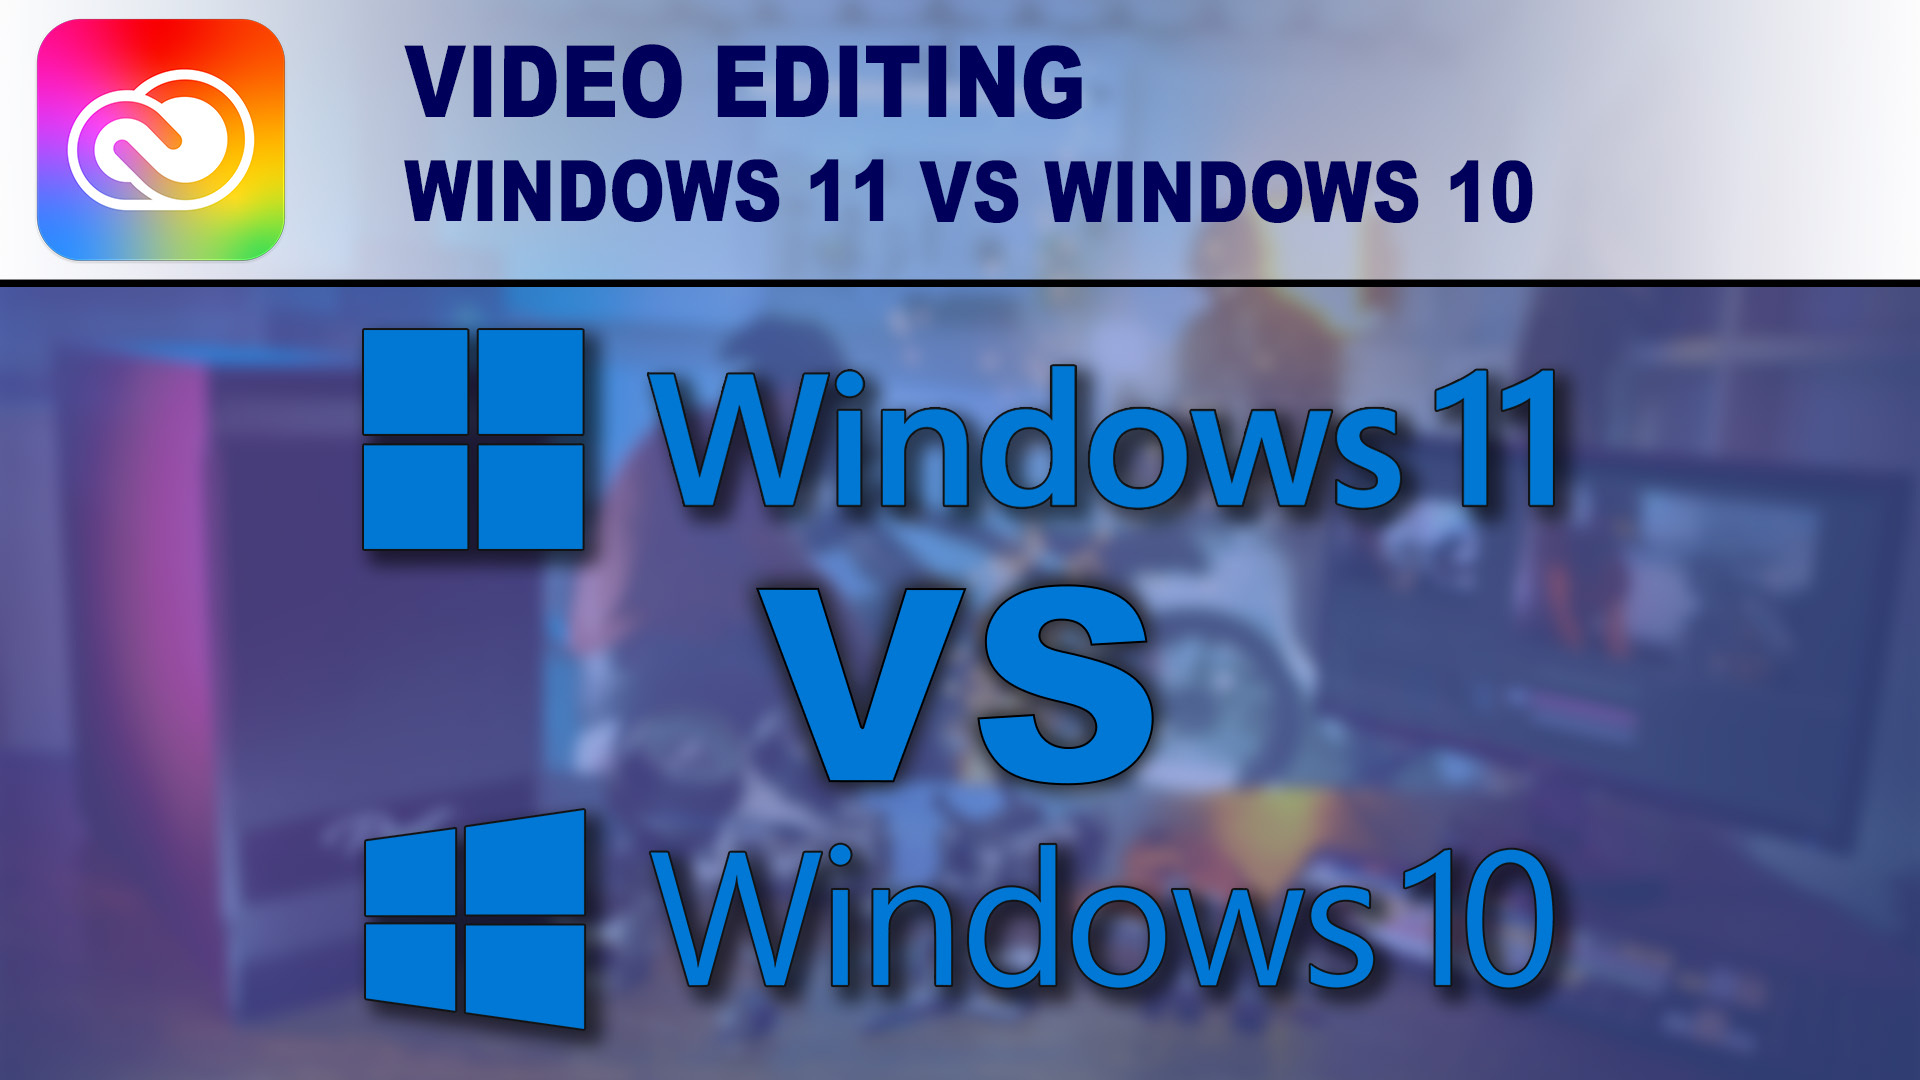 Windows 10 vs Windows 11 for video editing